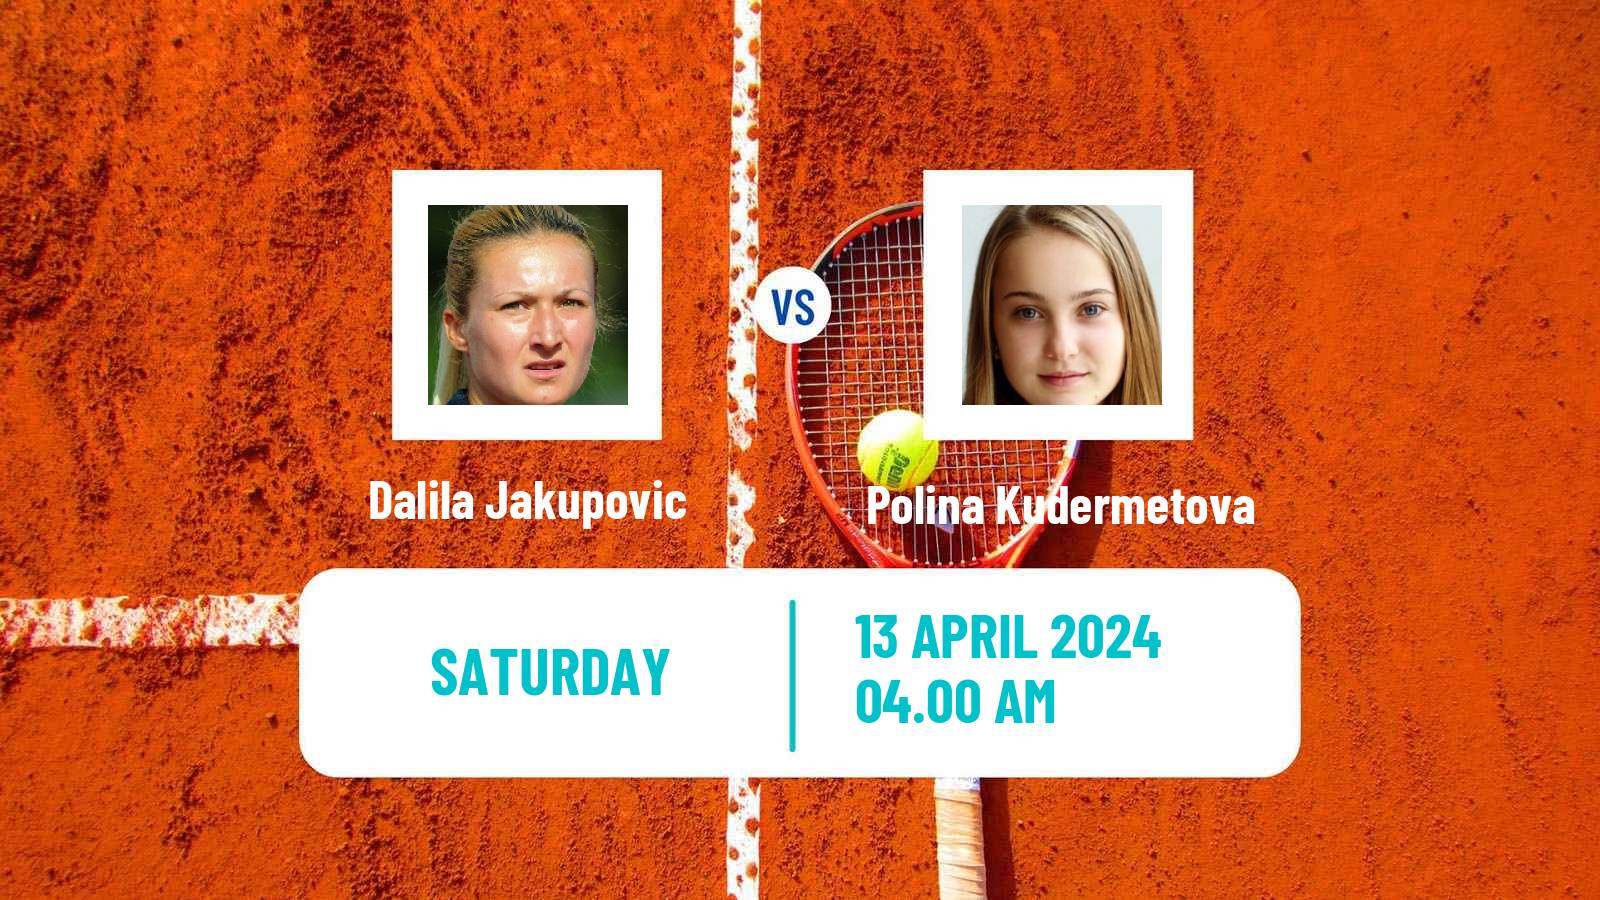 Tennis WTA Rouen Dalila Jakupovic - Polina Kudermetova